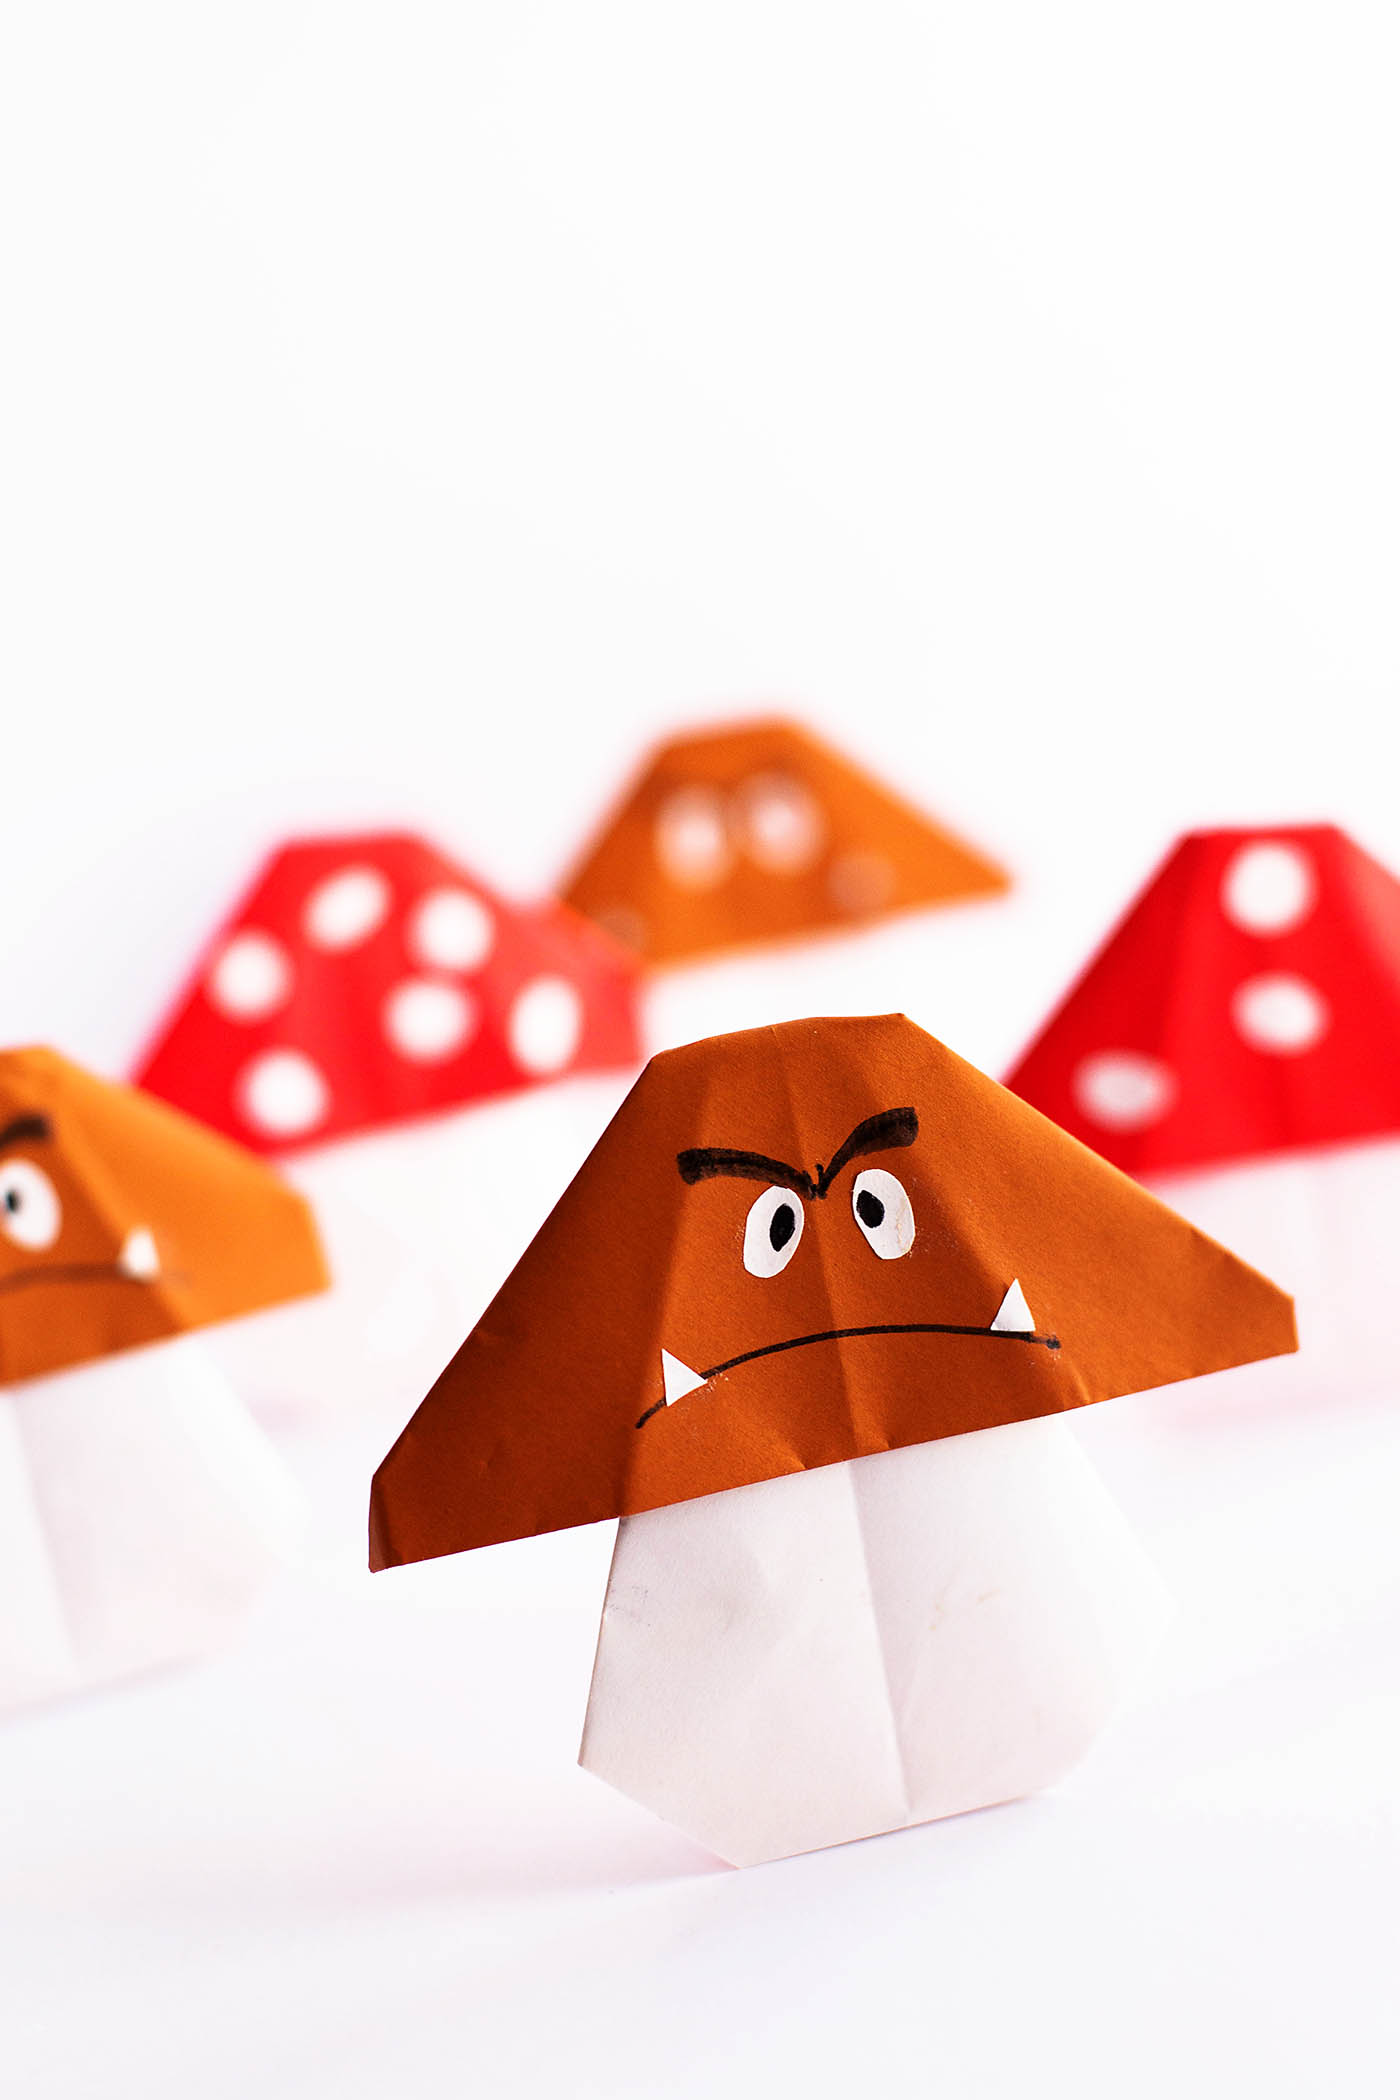 Easy Mario Mushroom origami craft